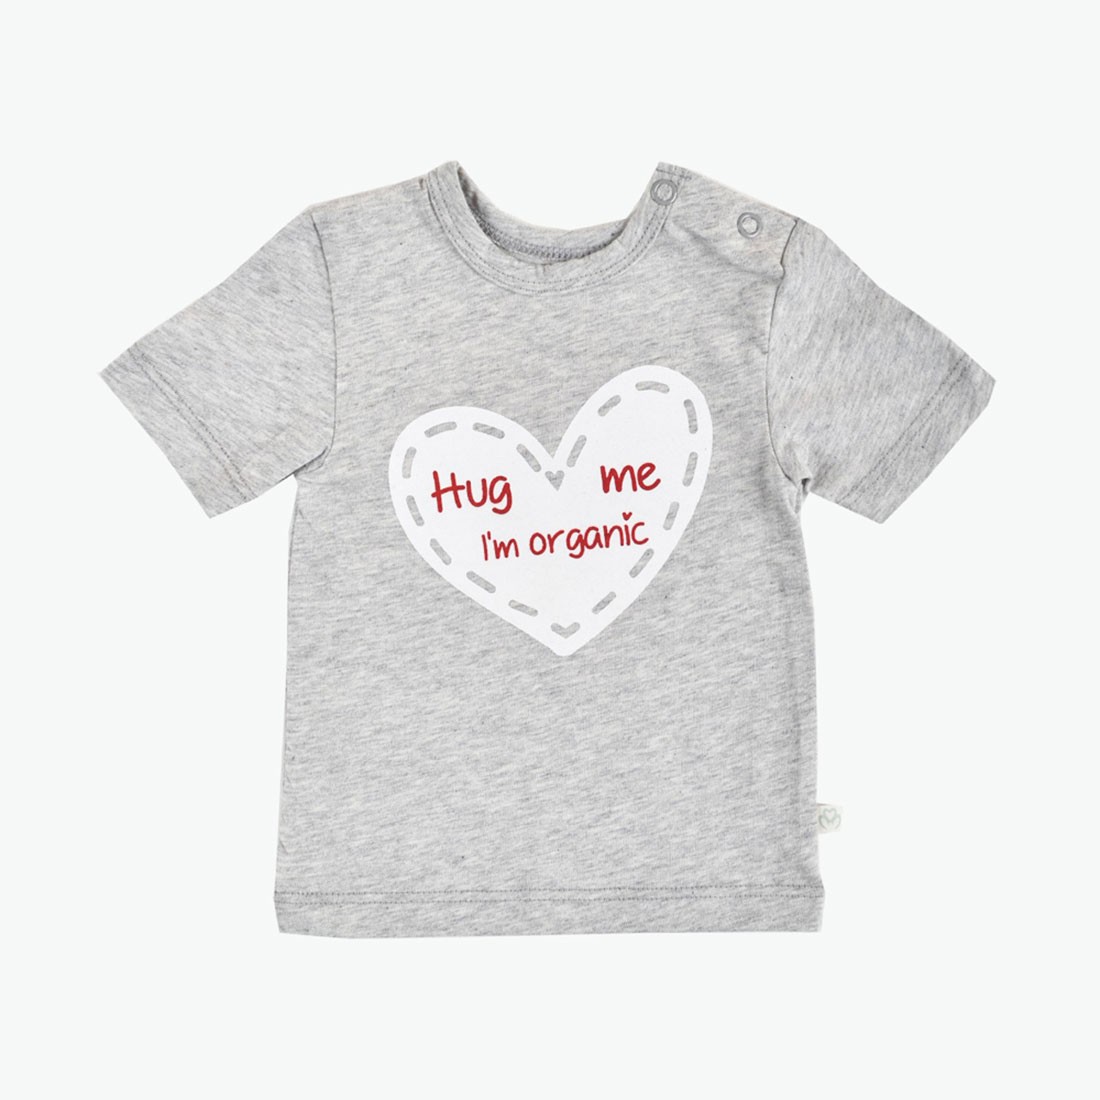 OrganicEra Organic T-shirt, Hug Me 